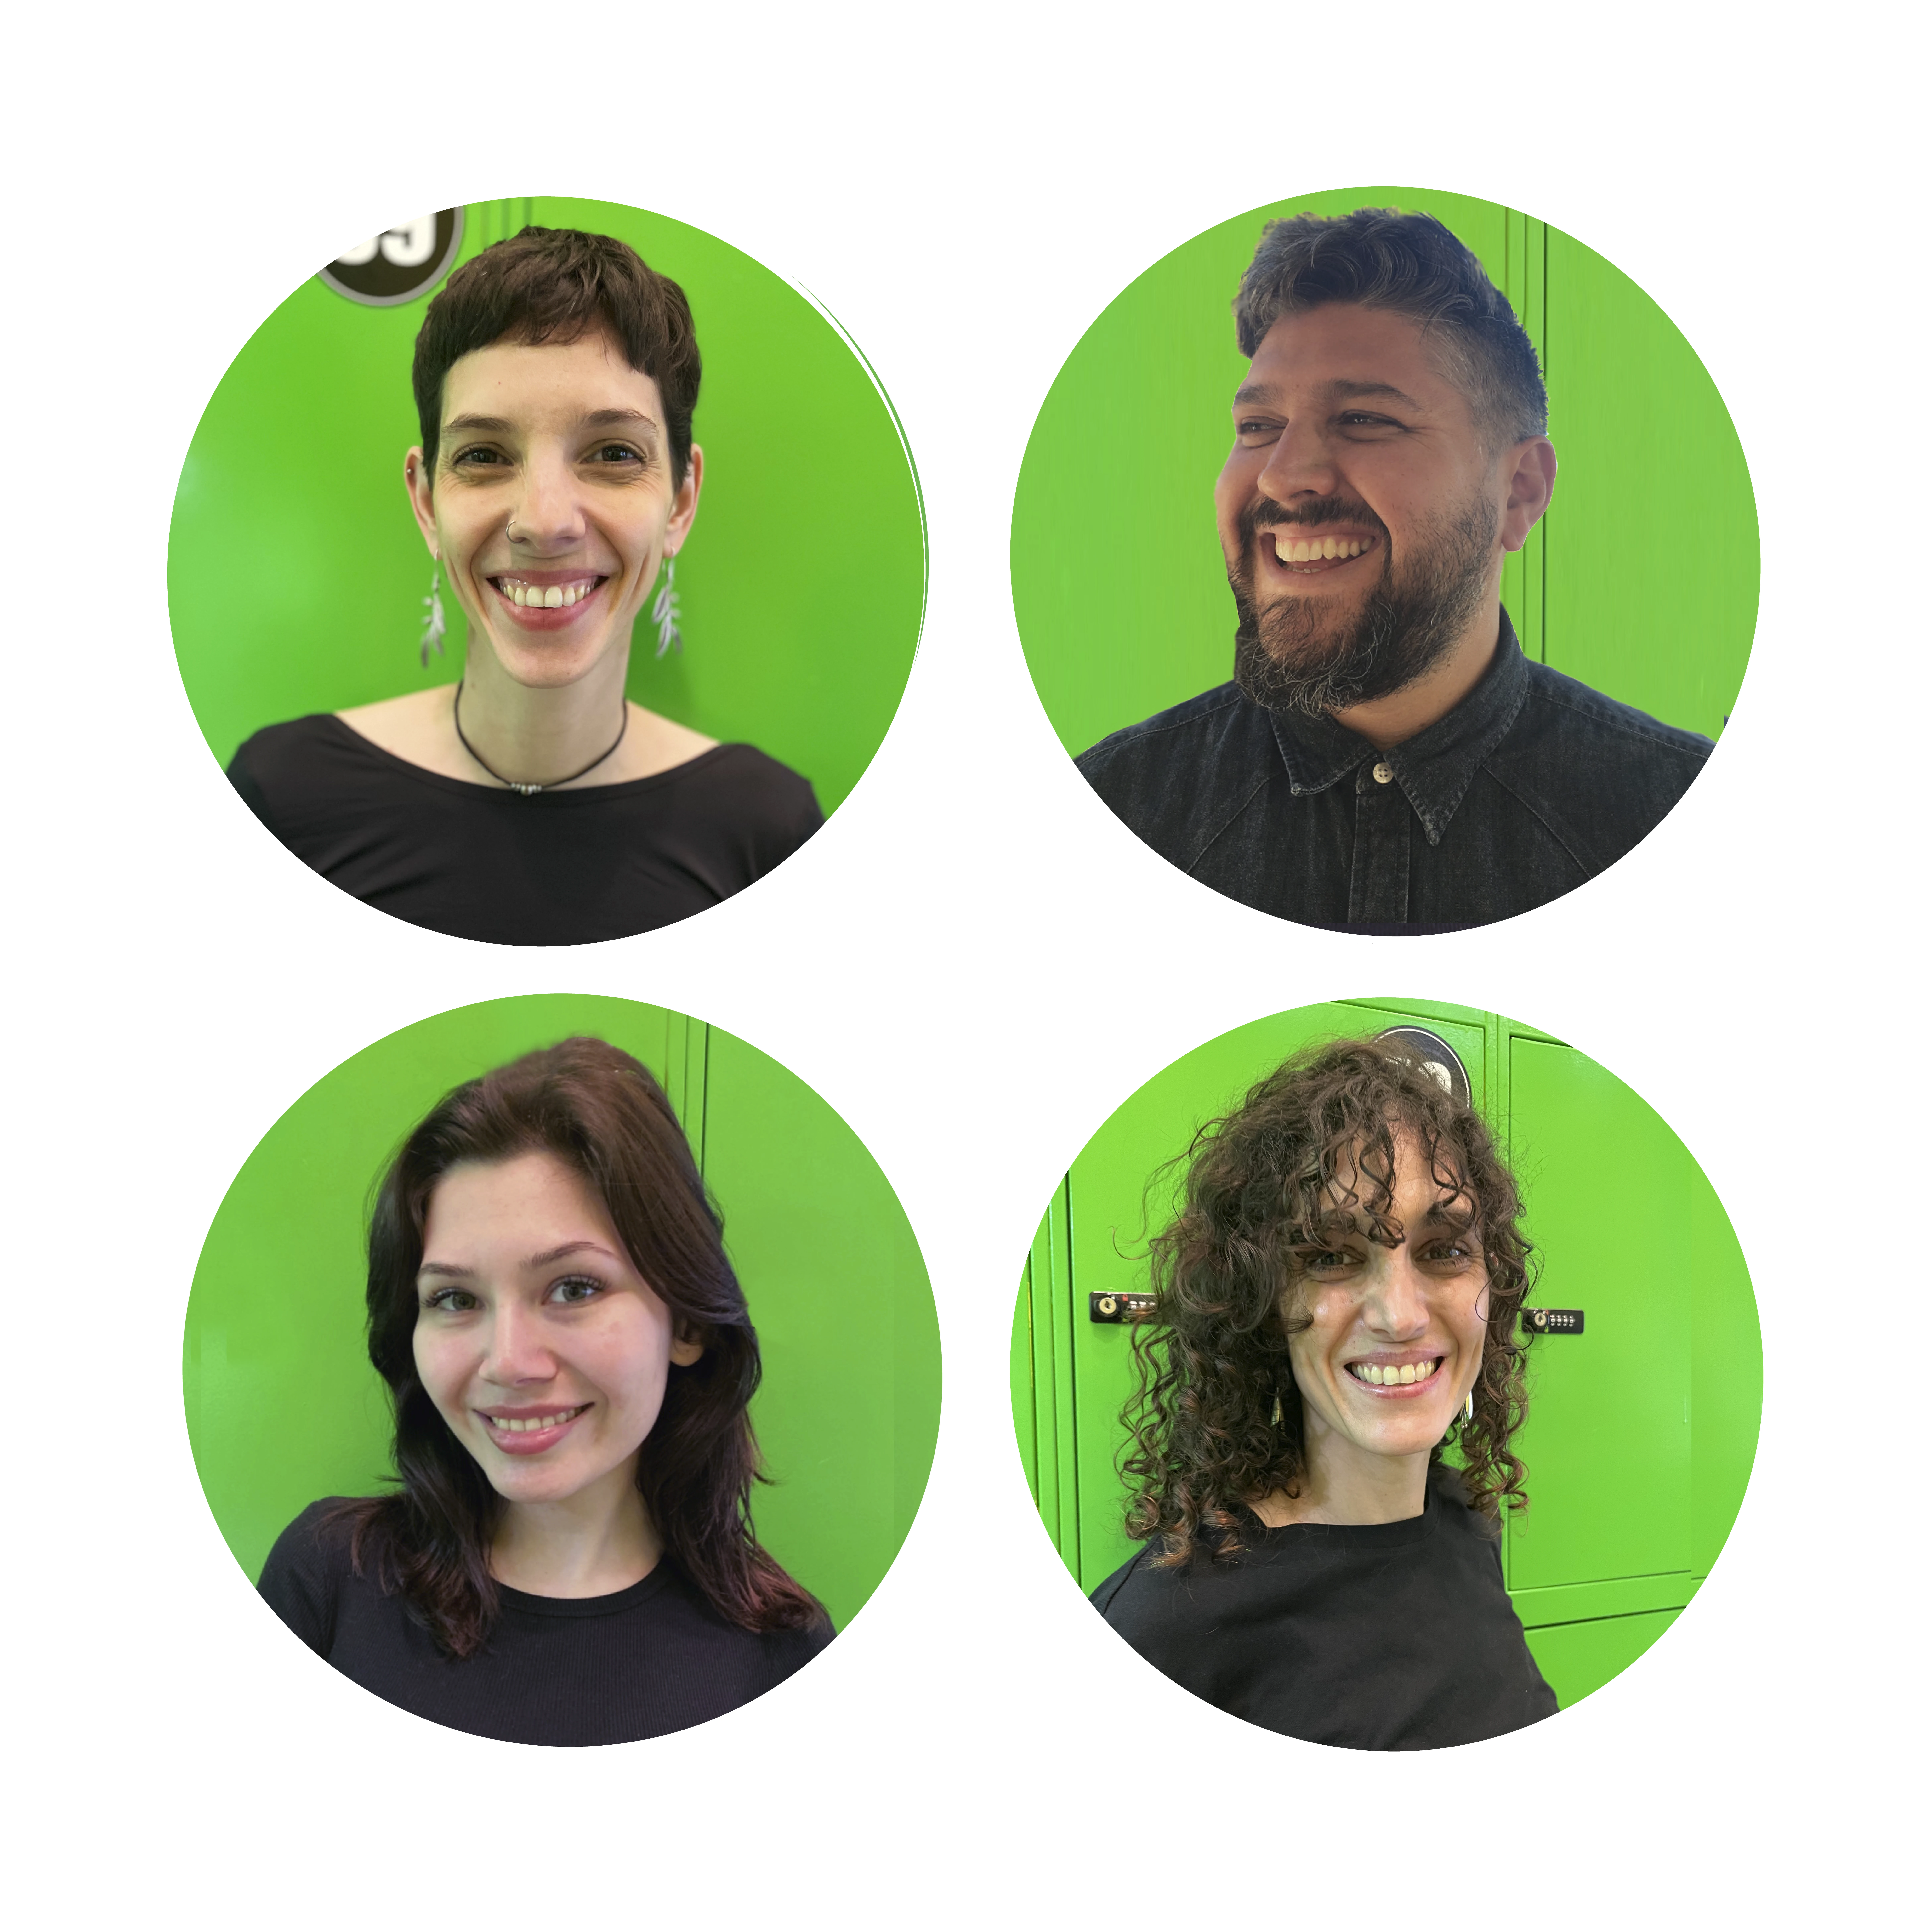 An image that shows feelfreestorage's team: Carla, Gabby, Luis & Emilia